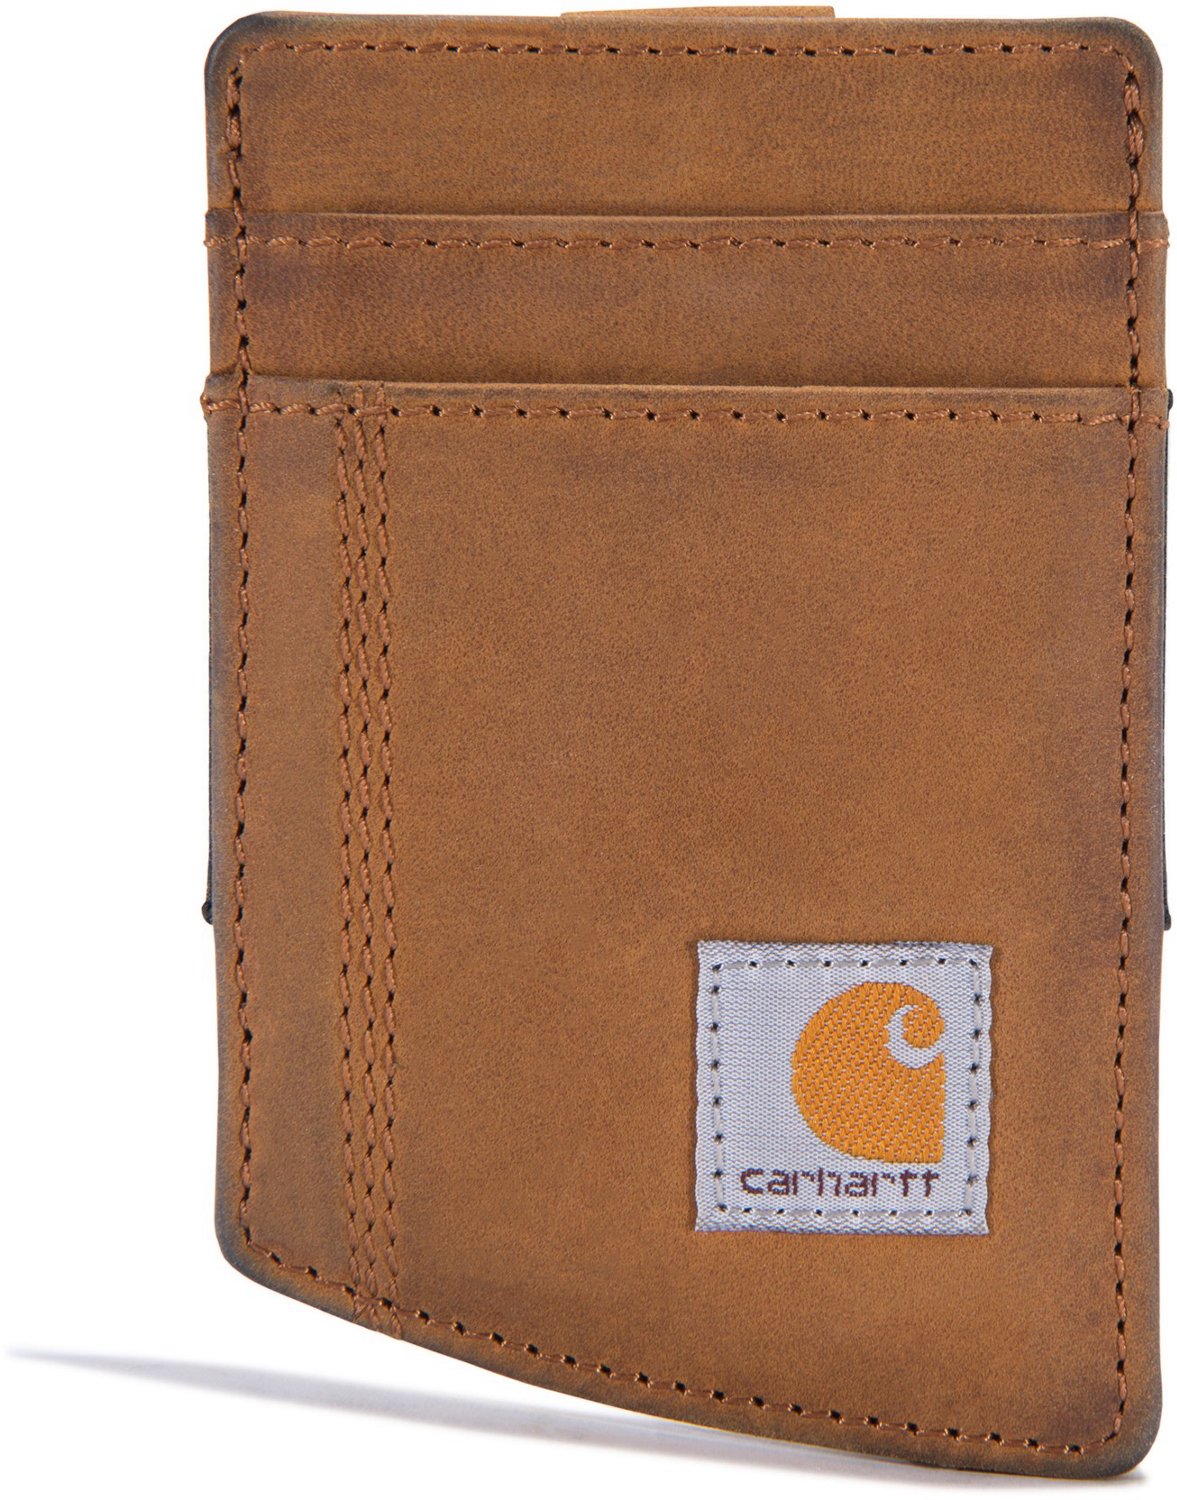 Carhartt Front Pocket Wallet | Free Shipping at Academy